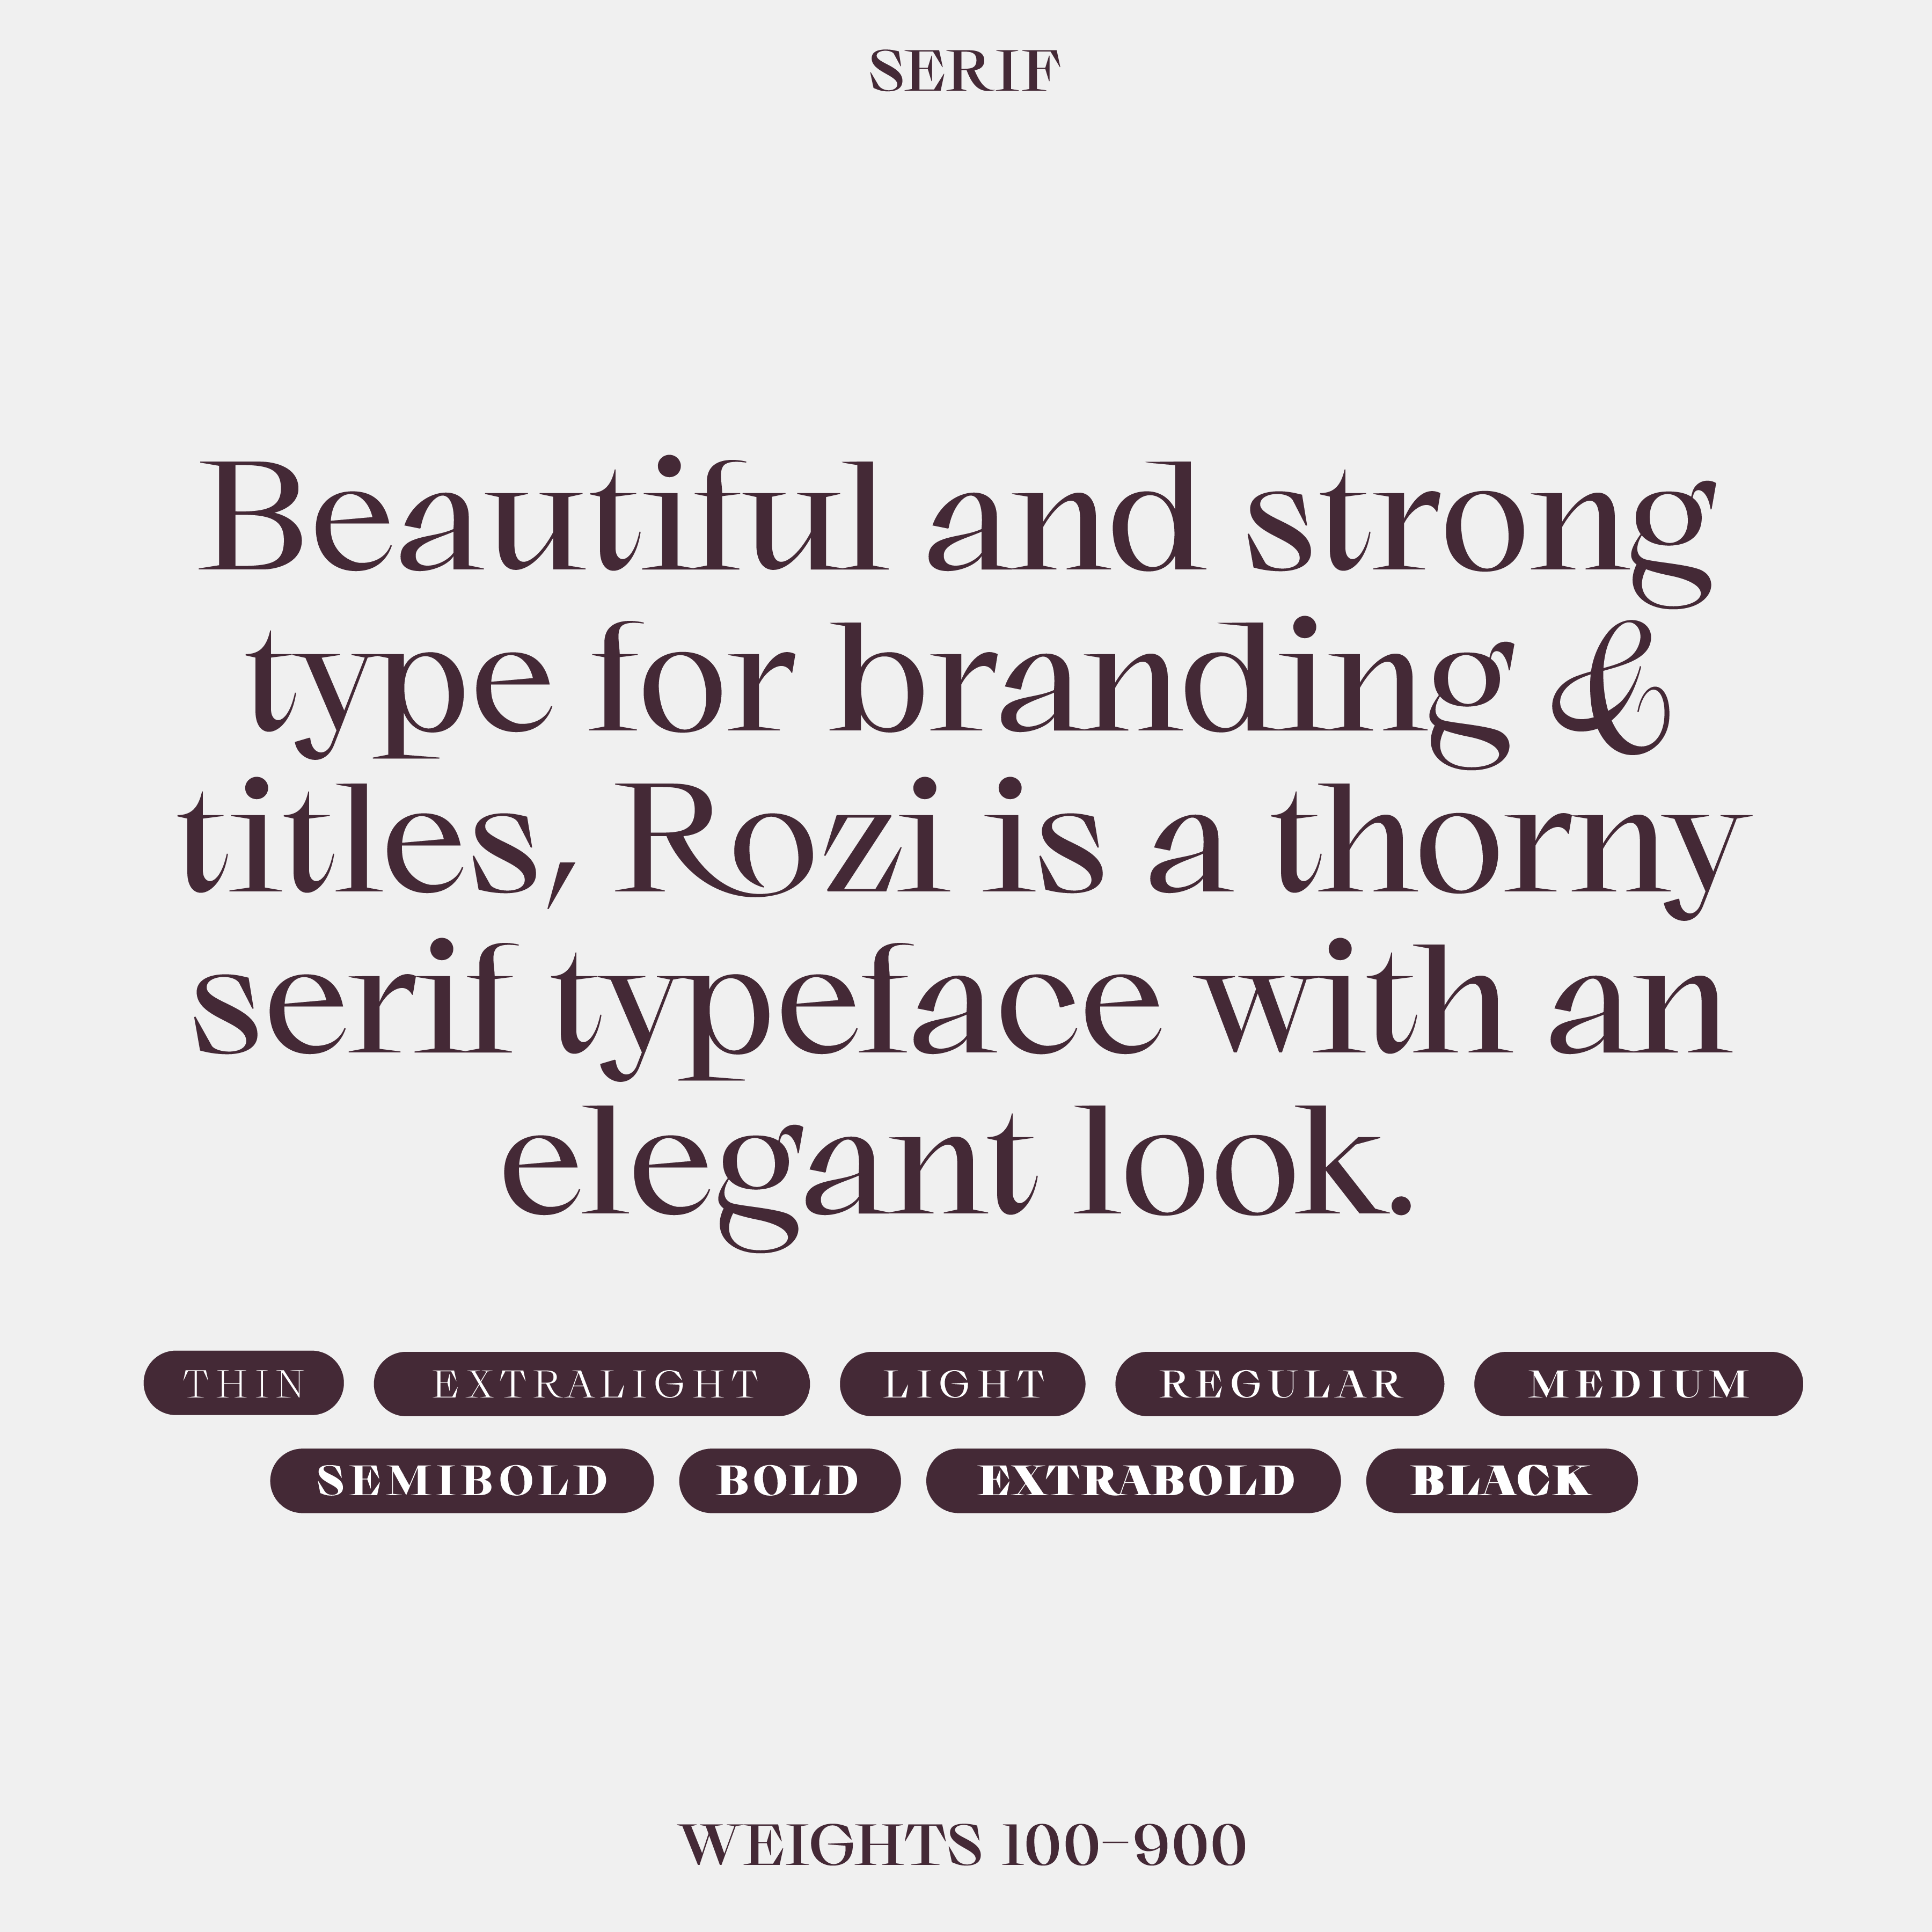 Rozi—Modern, elegant font with sharp serifs